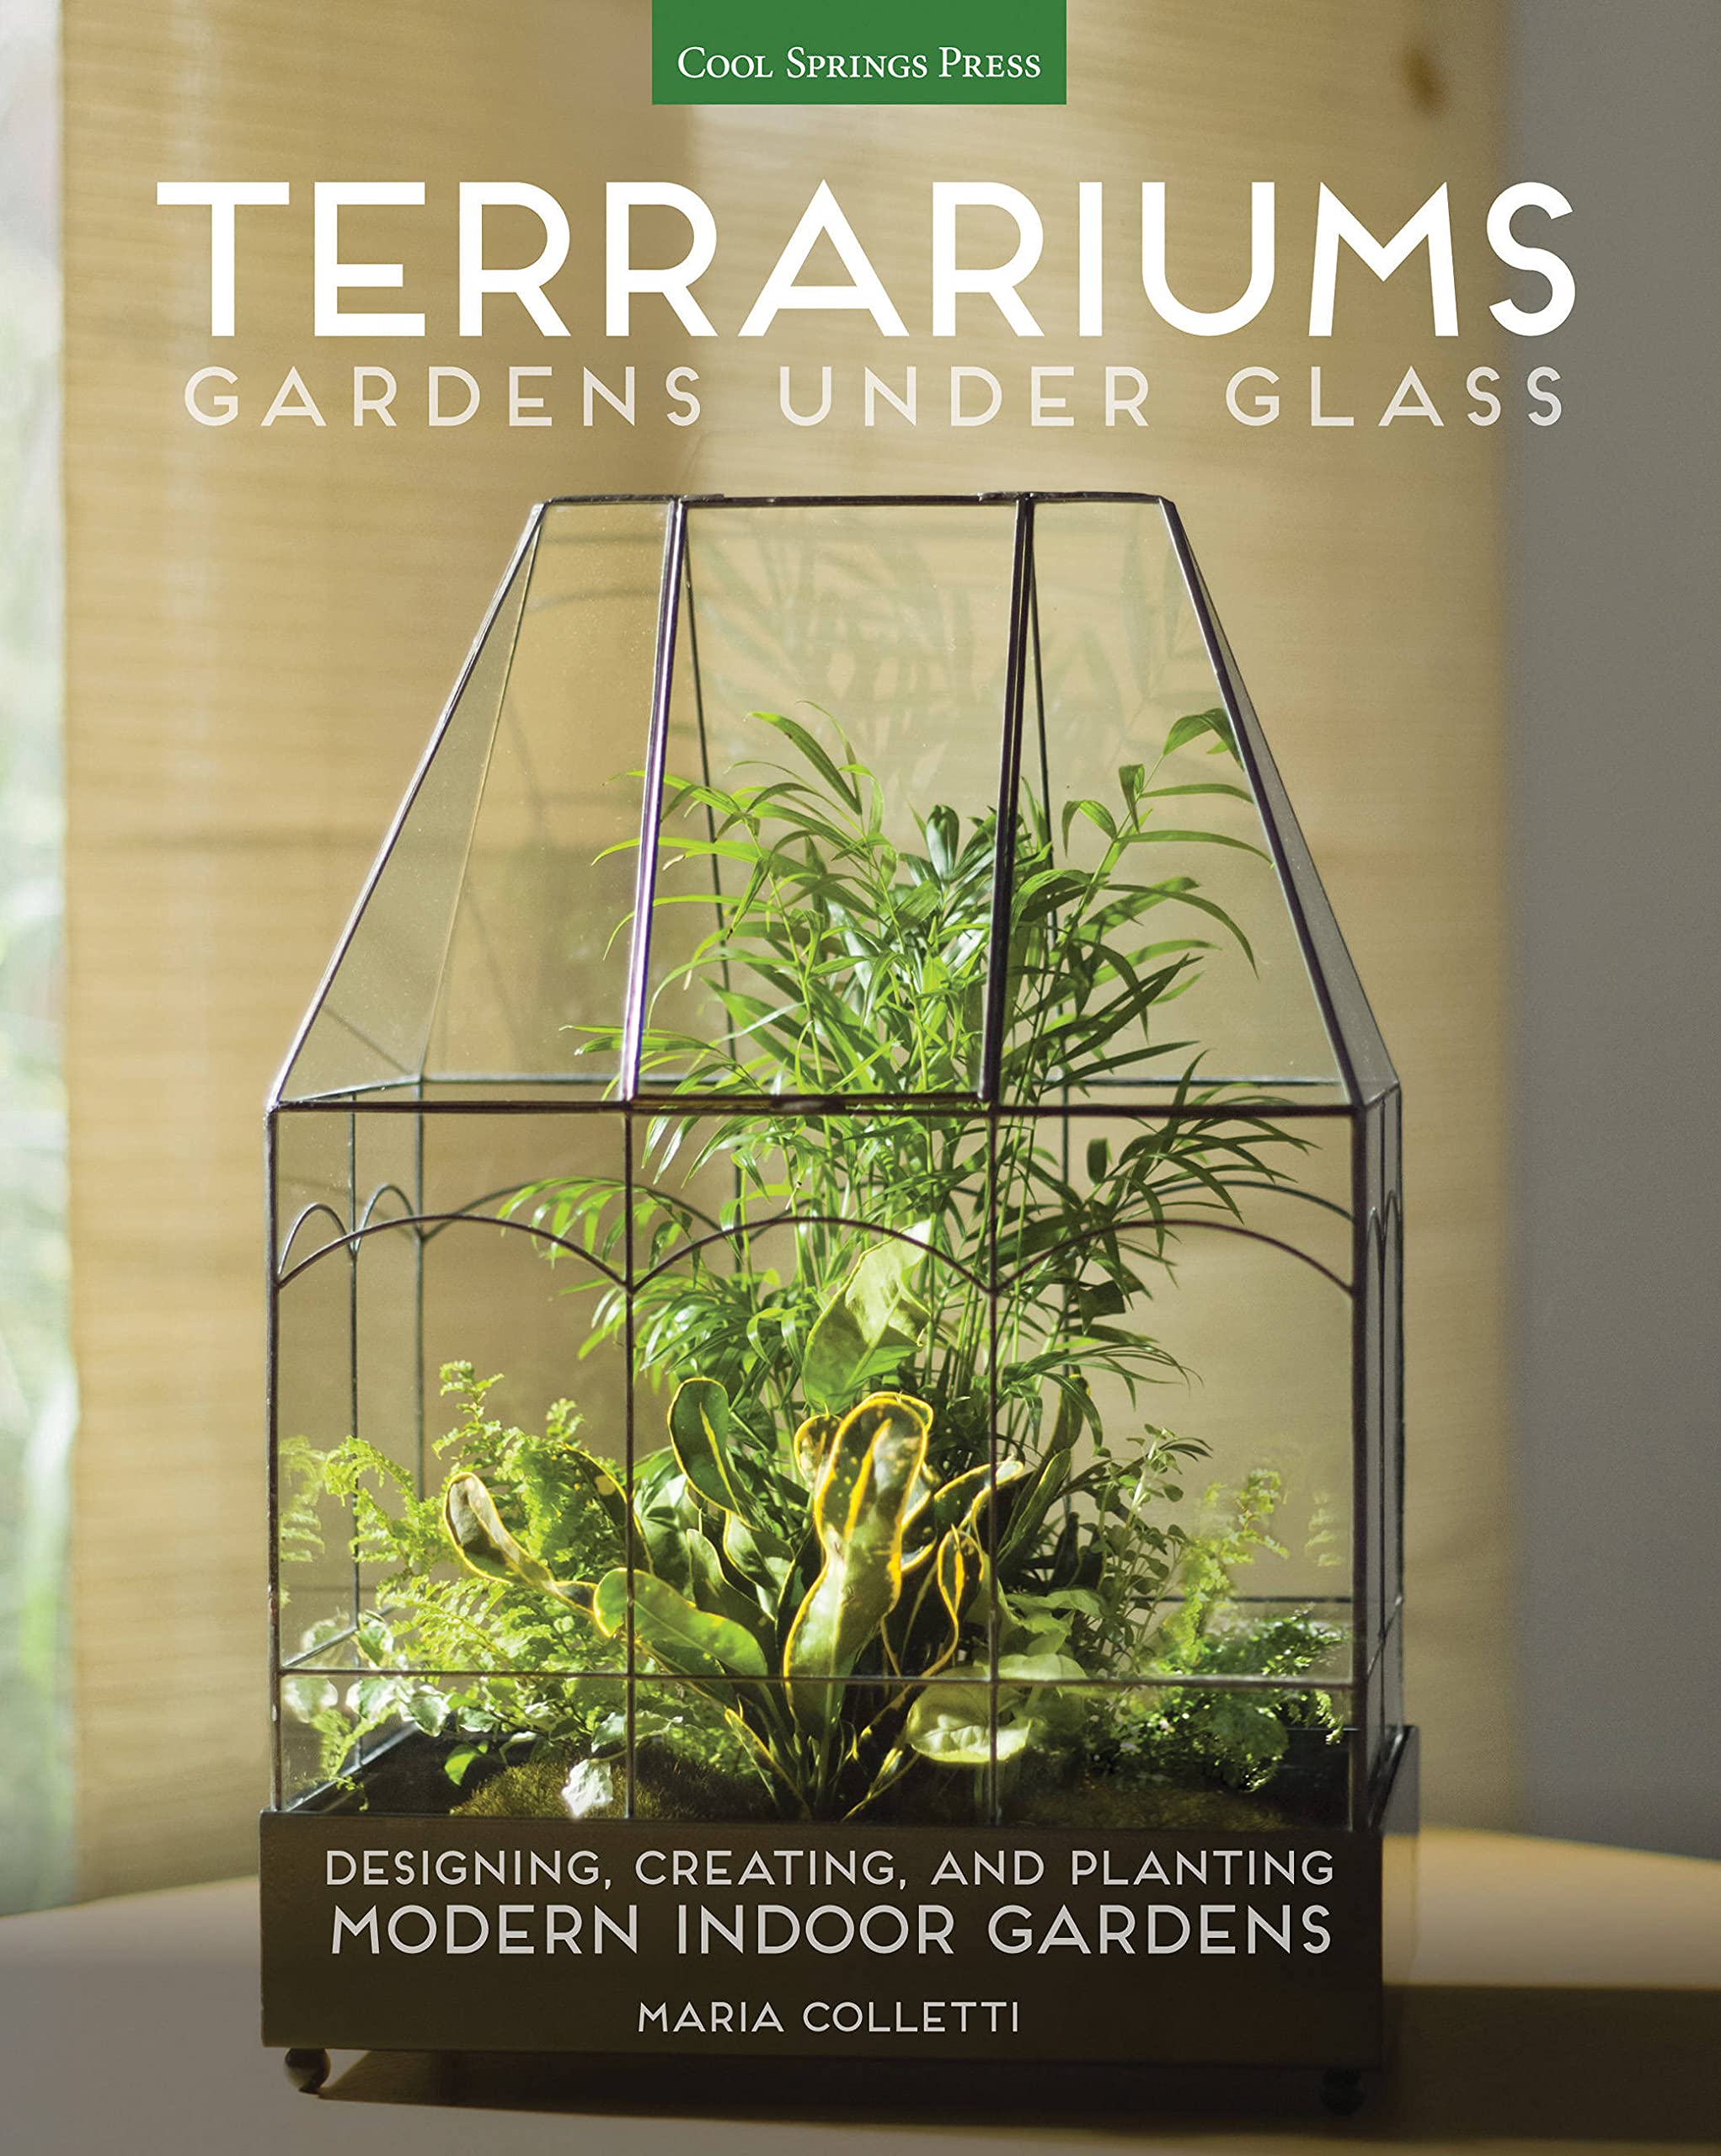 Terrariums – Gardens under glass book by Maria Colletti – Amazon